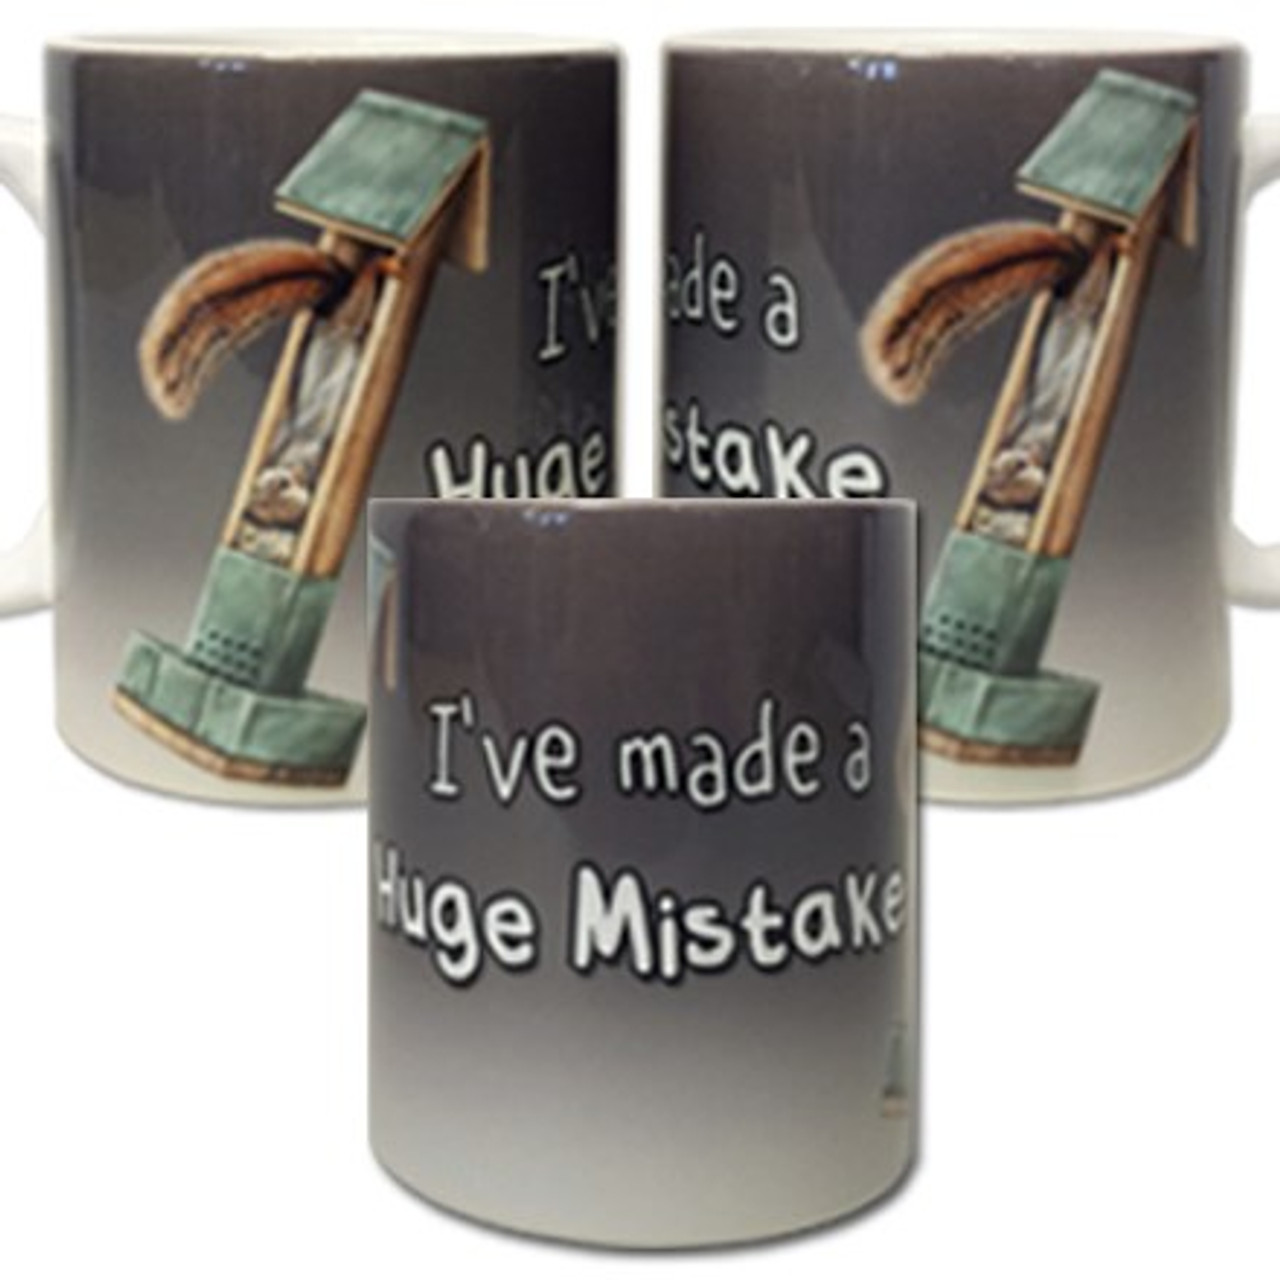 I've made a Huge Mistake Mug Squirrel Coffee Mug